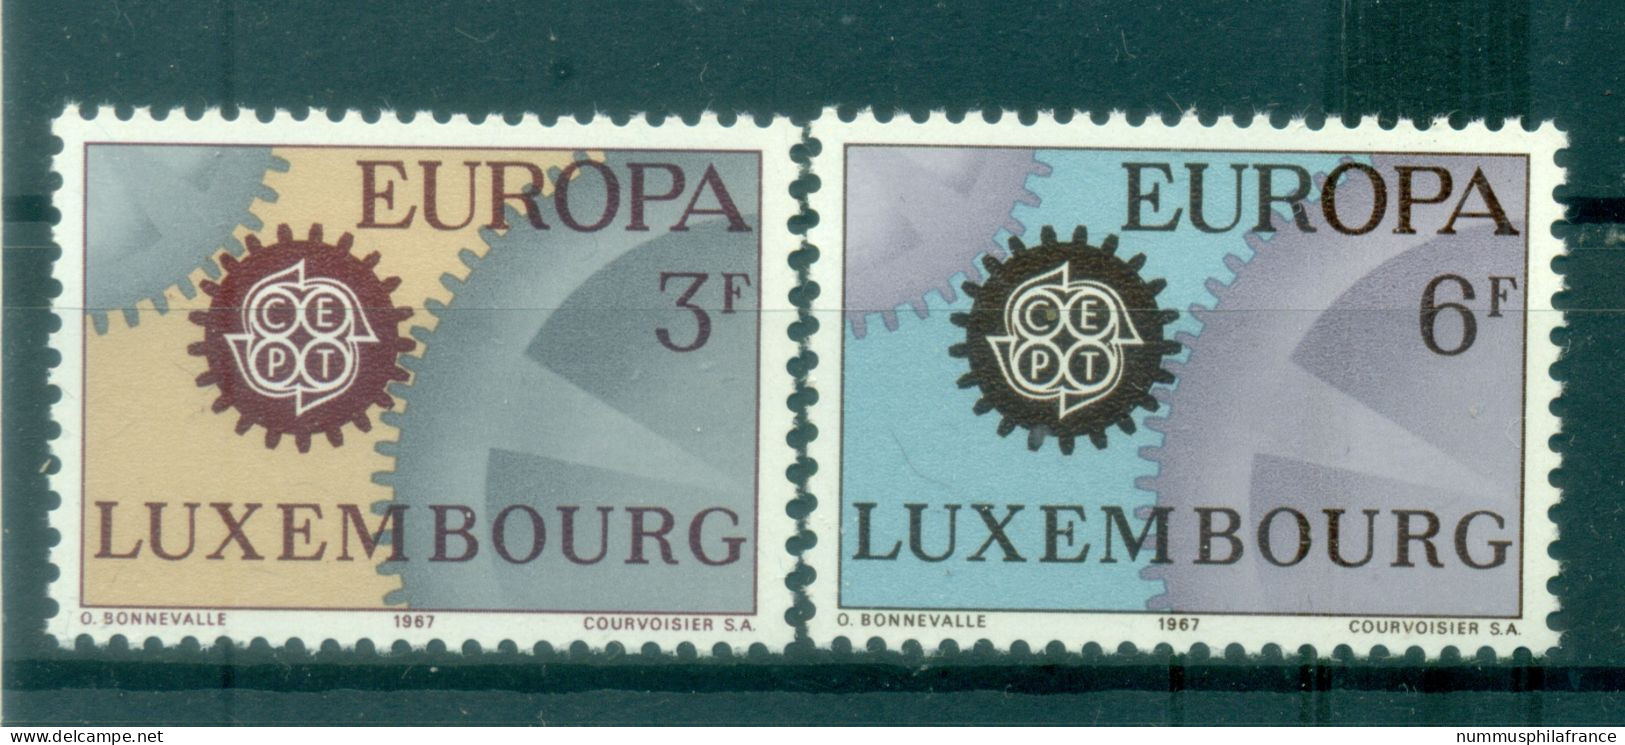 Luxembourg 1967 - Y & T N. 700/01 - Europa (Michel N. 748/49) - Ongebruikt